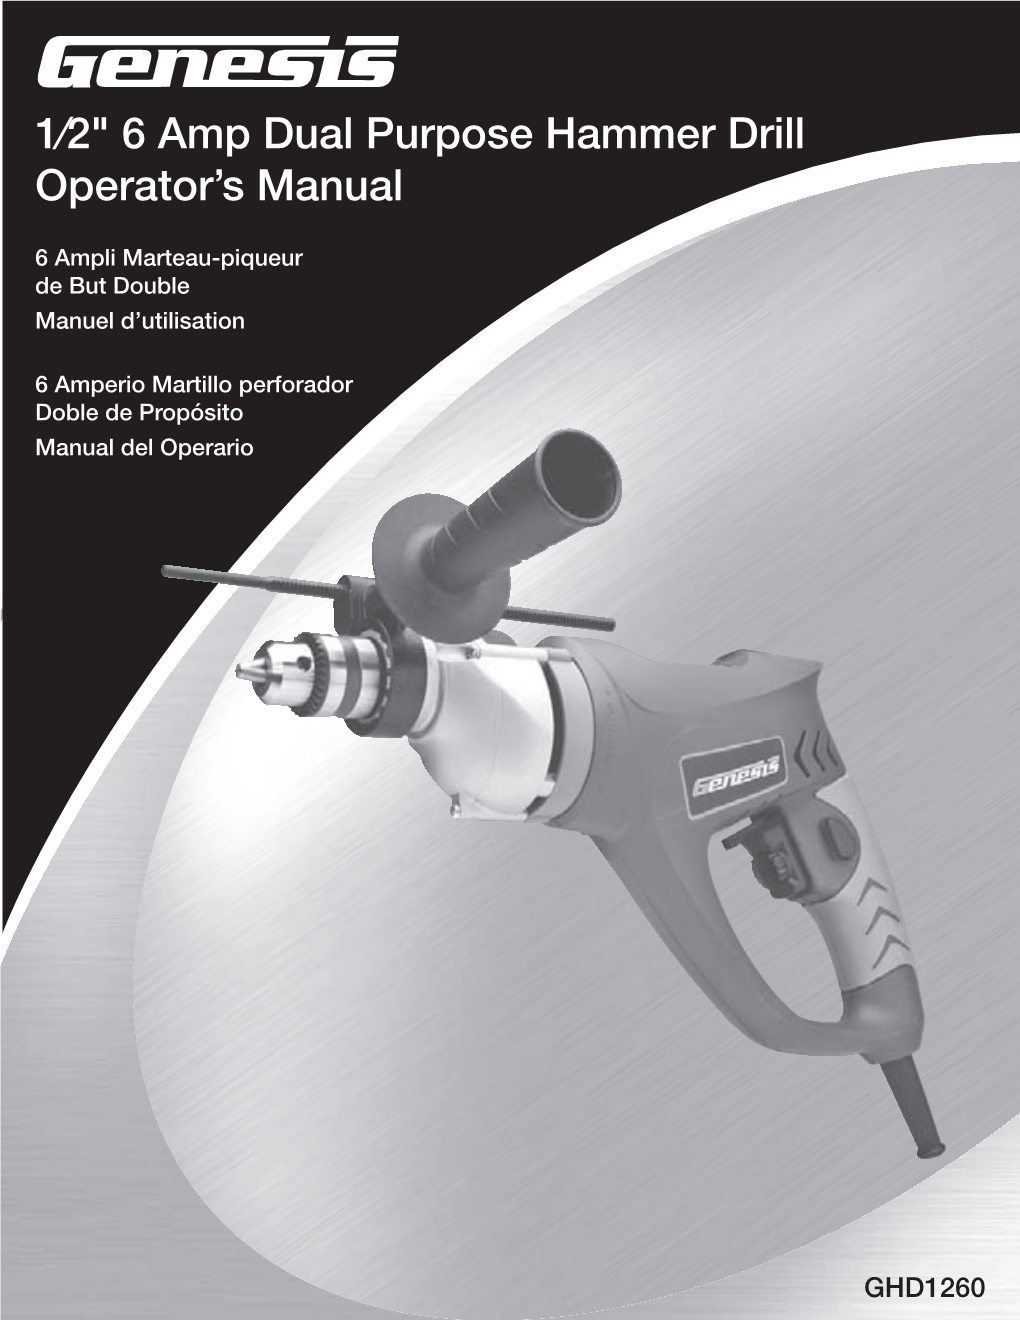 1⁄2" 6 Amp Dual Purpose Hammer Drill Operator's Manual